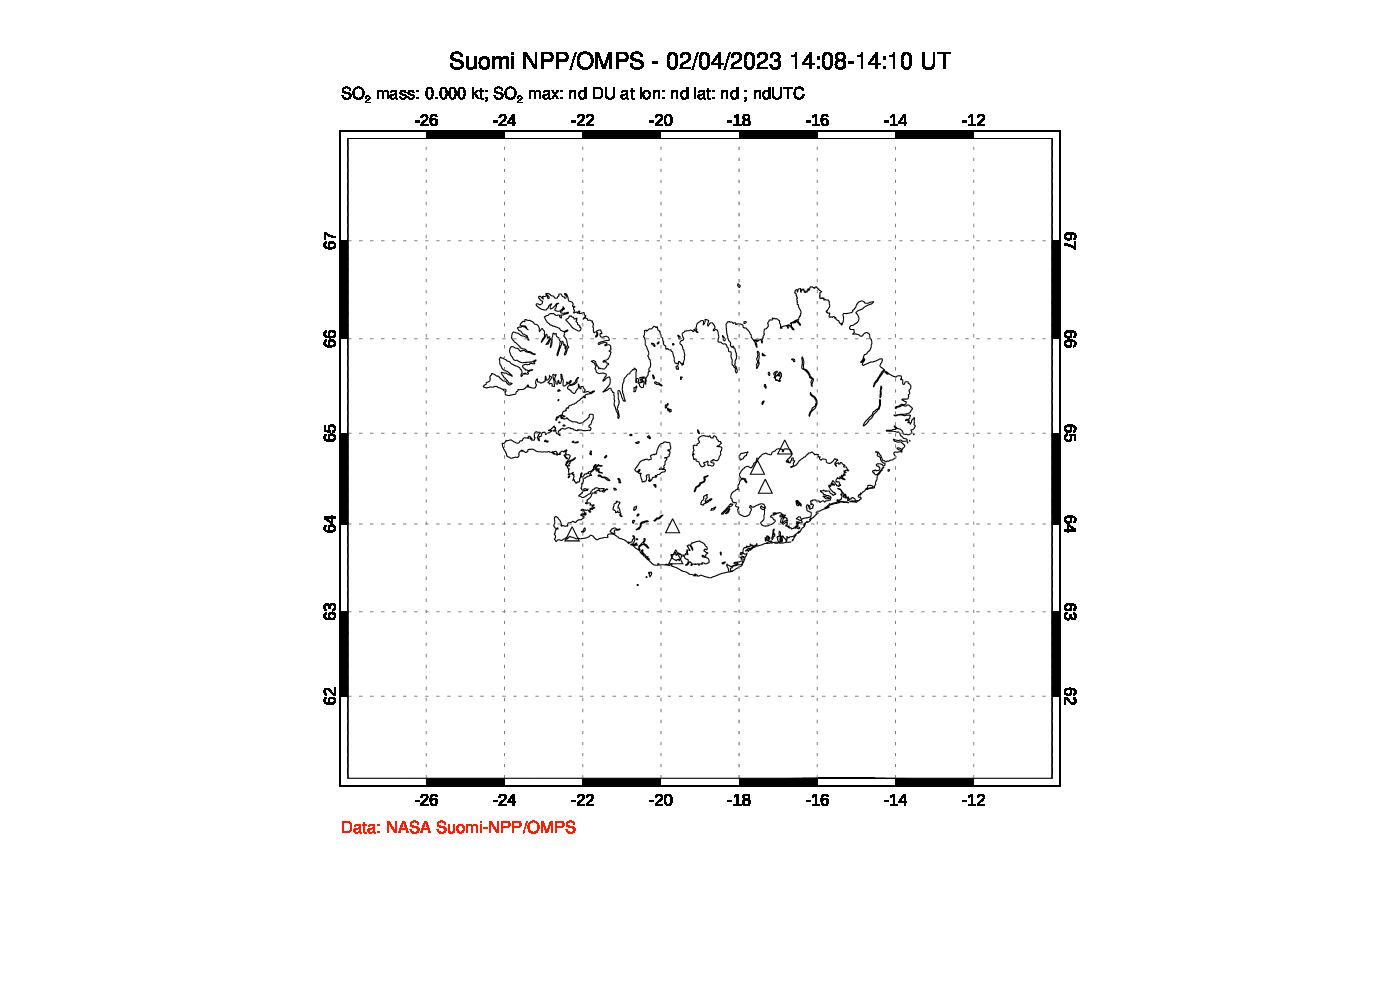 A sulfur dioxide image over Iceland on Feb 04, 2023.